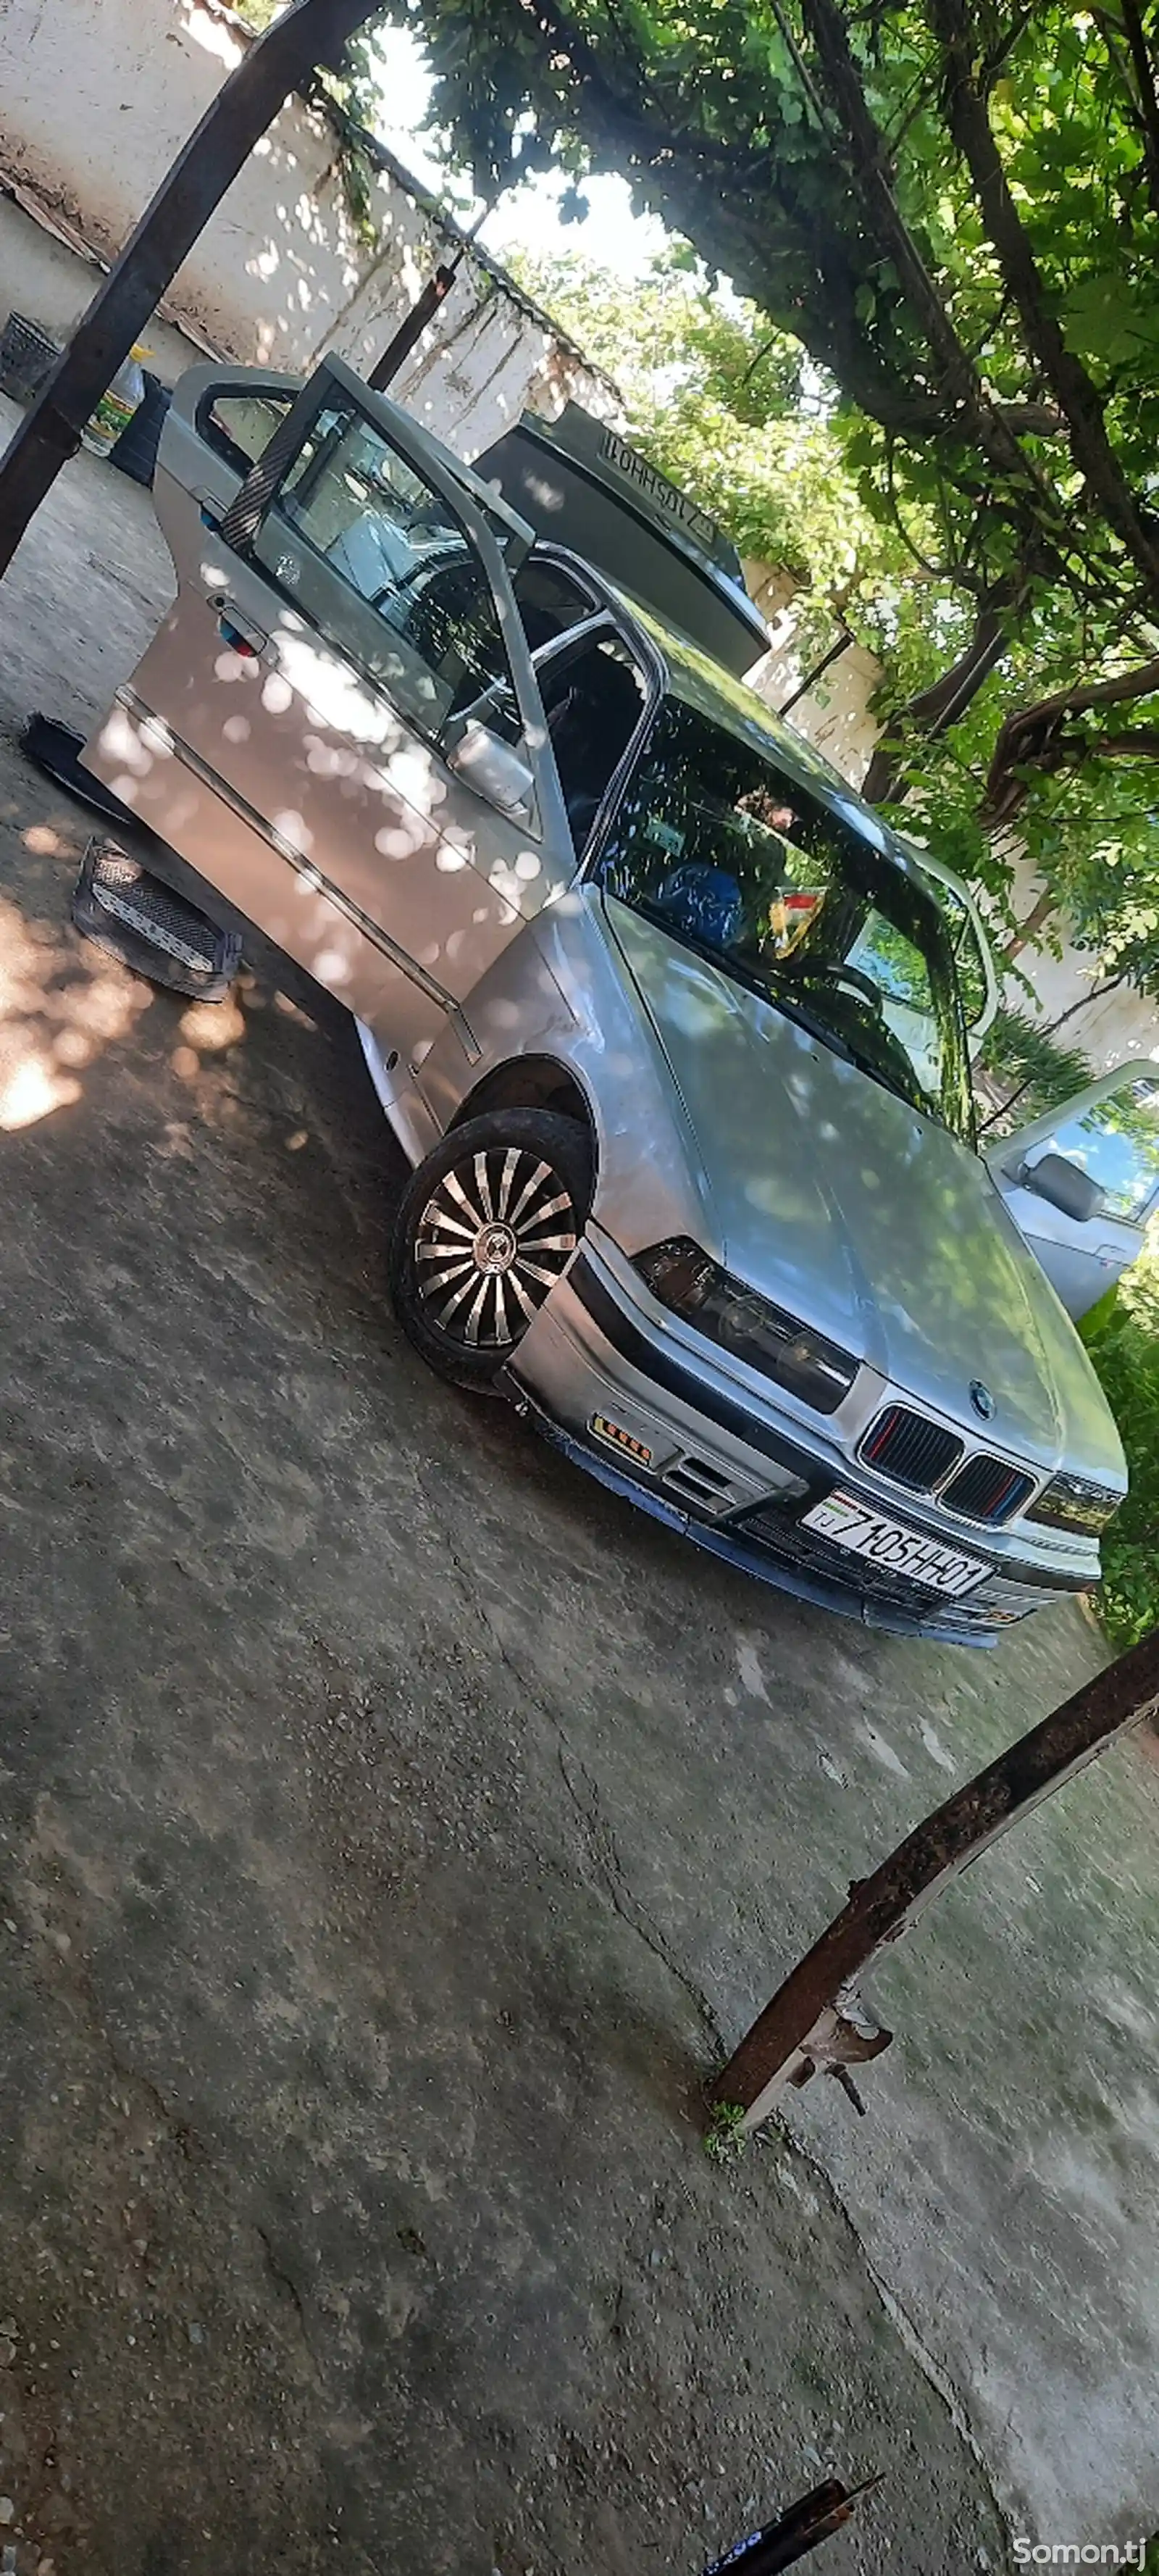 BMW 3 series, 1993-2